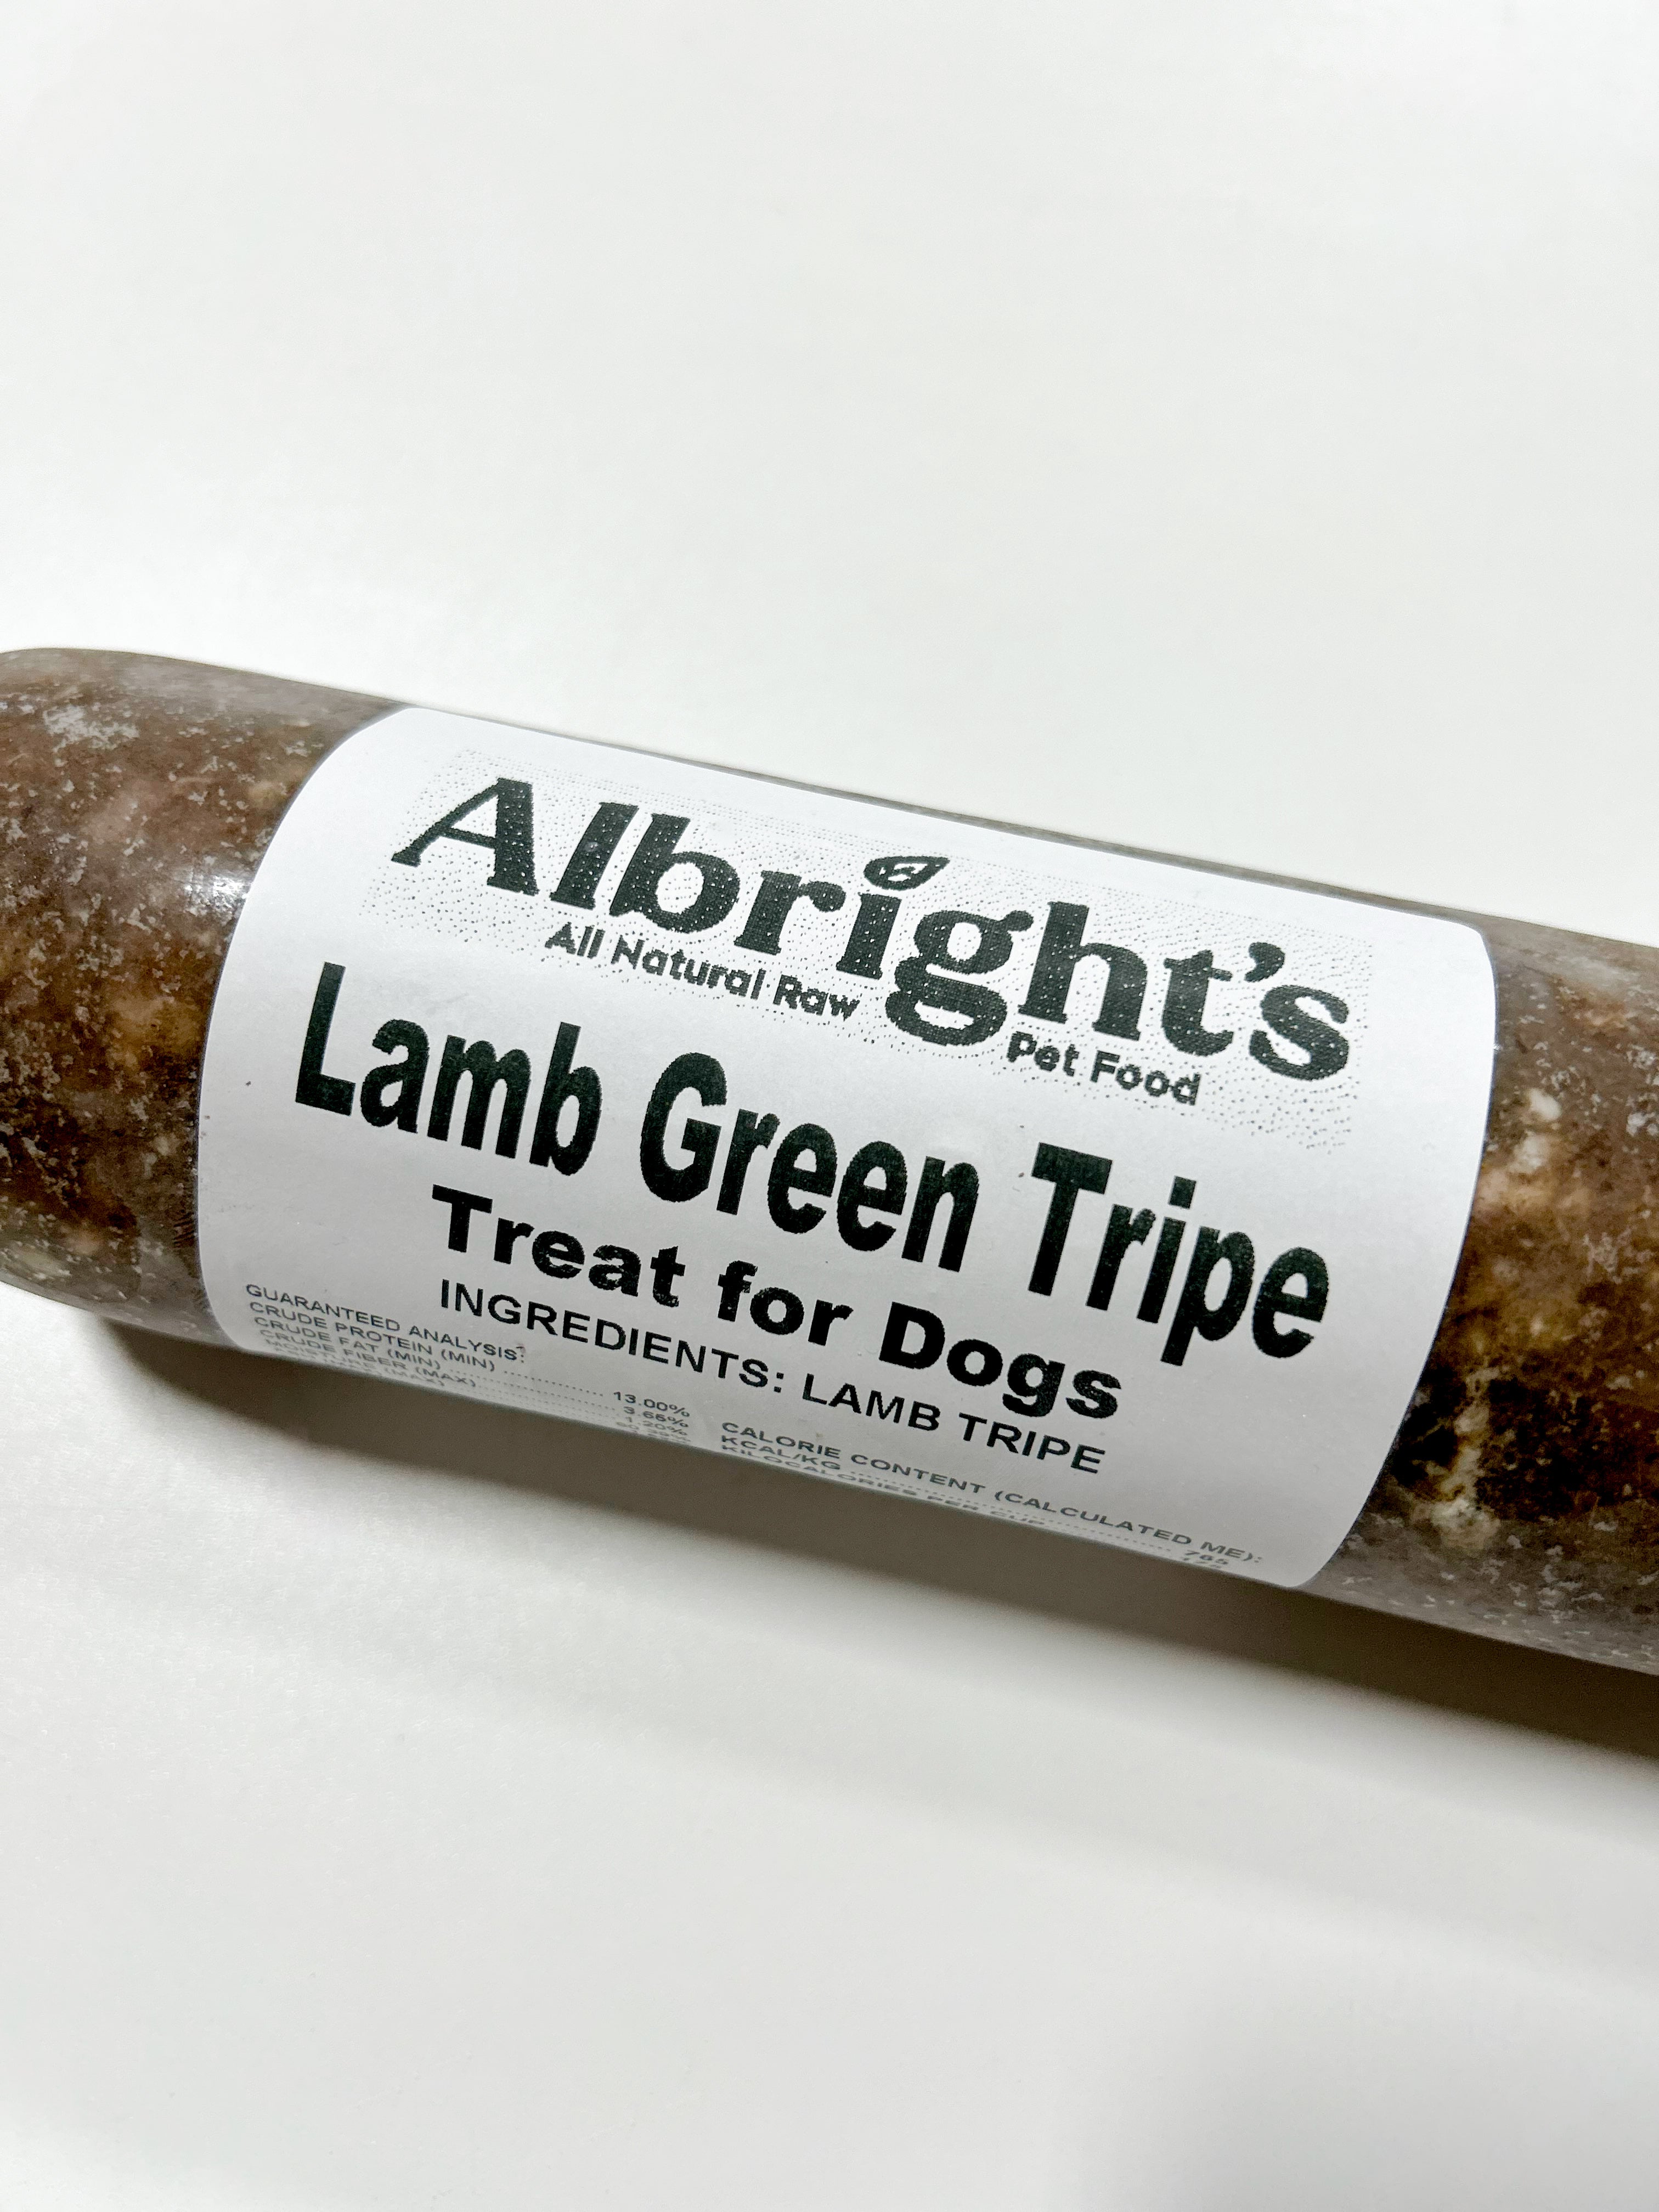 Albright's Green Lamb Tripe - 2 lb/Individual Roll